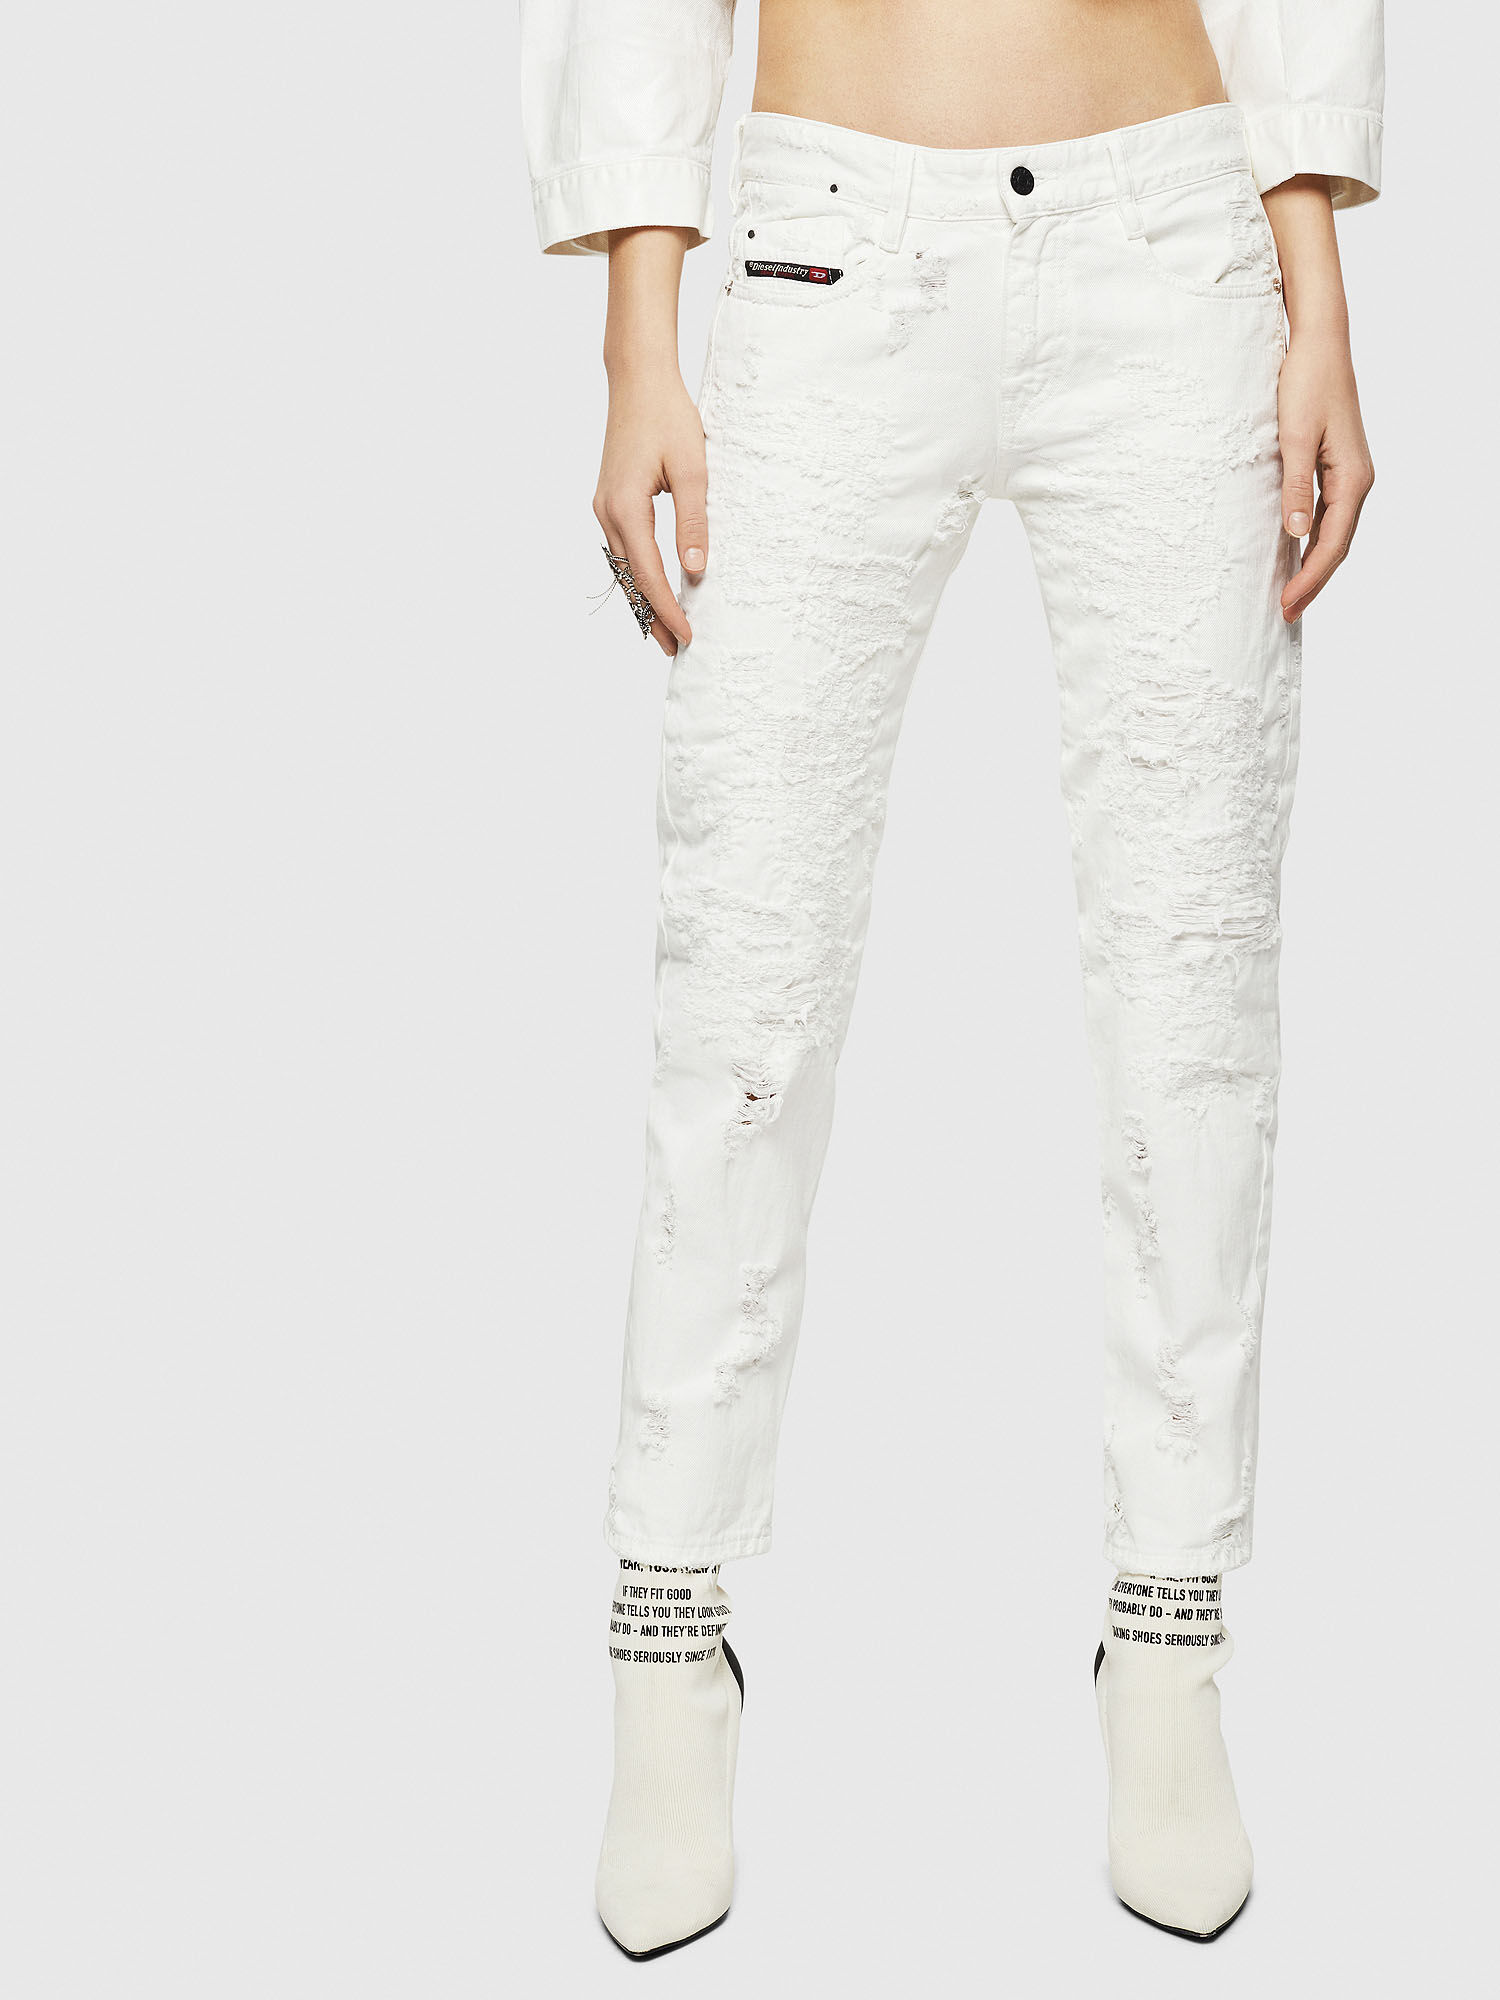 diesel white jeans